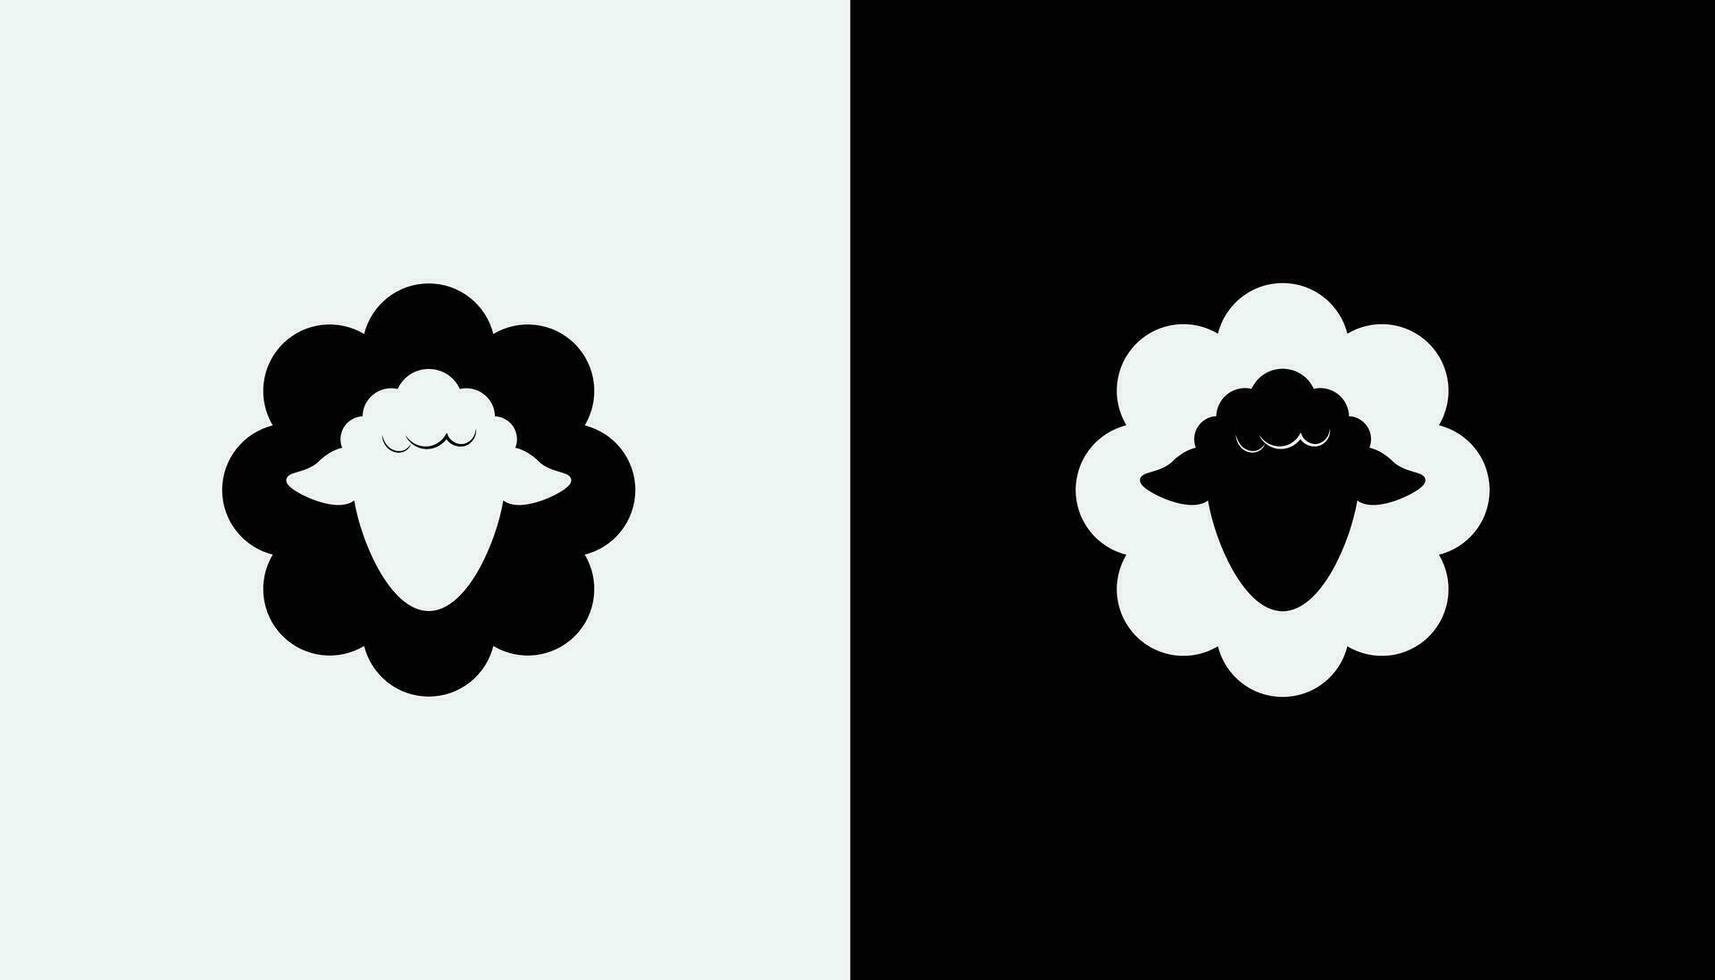 black sheep and white sheep logo vector